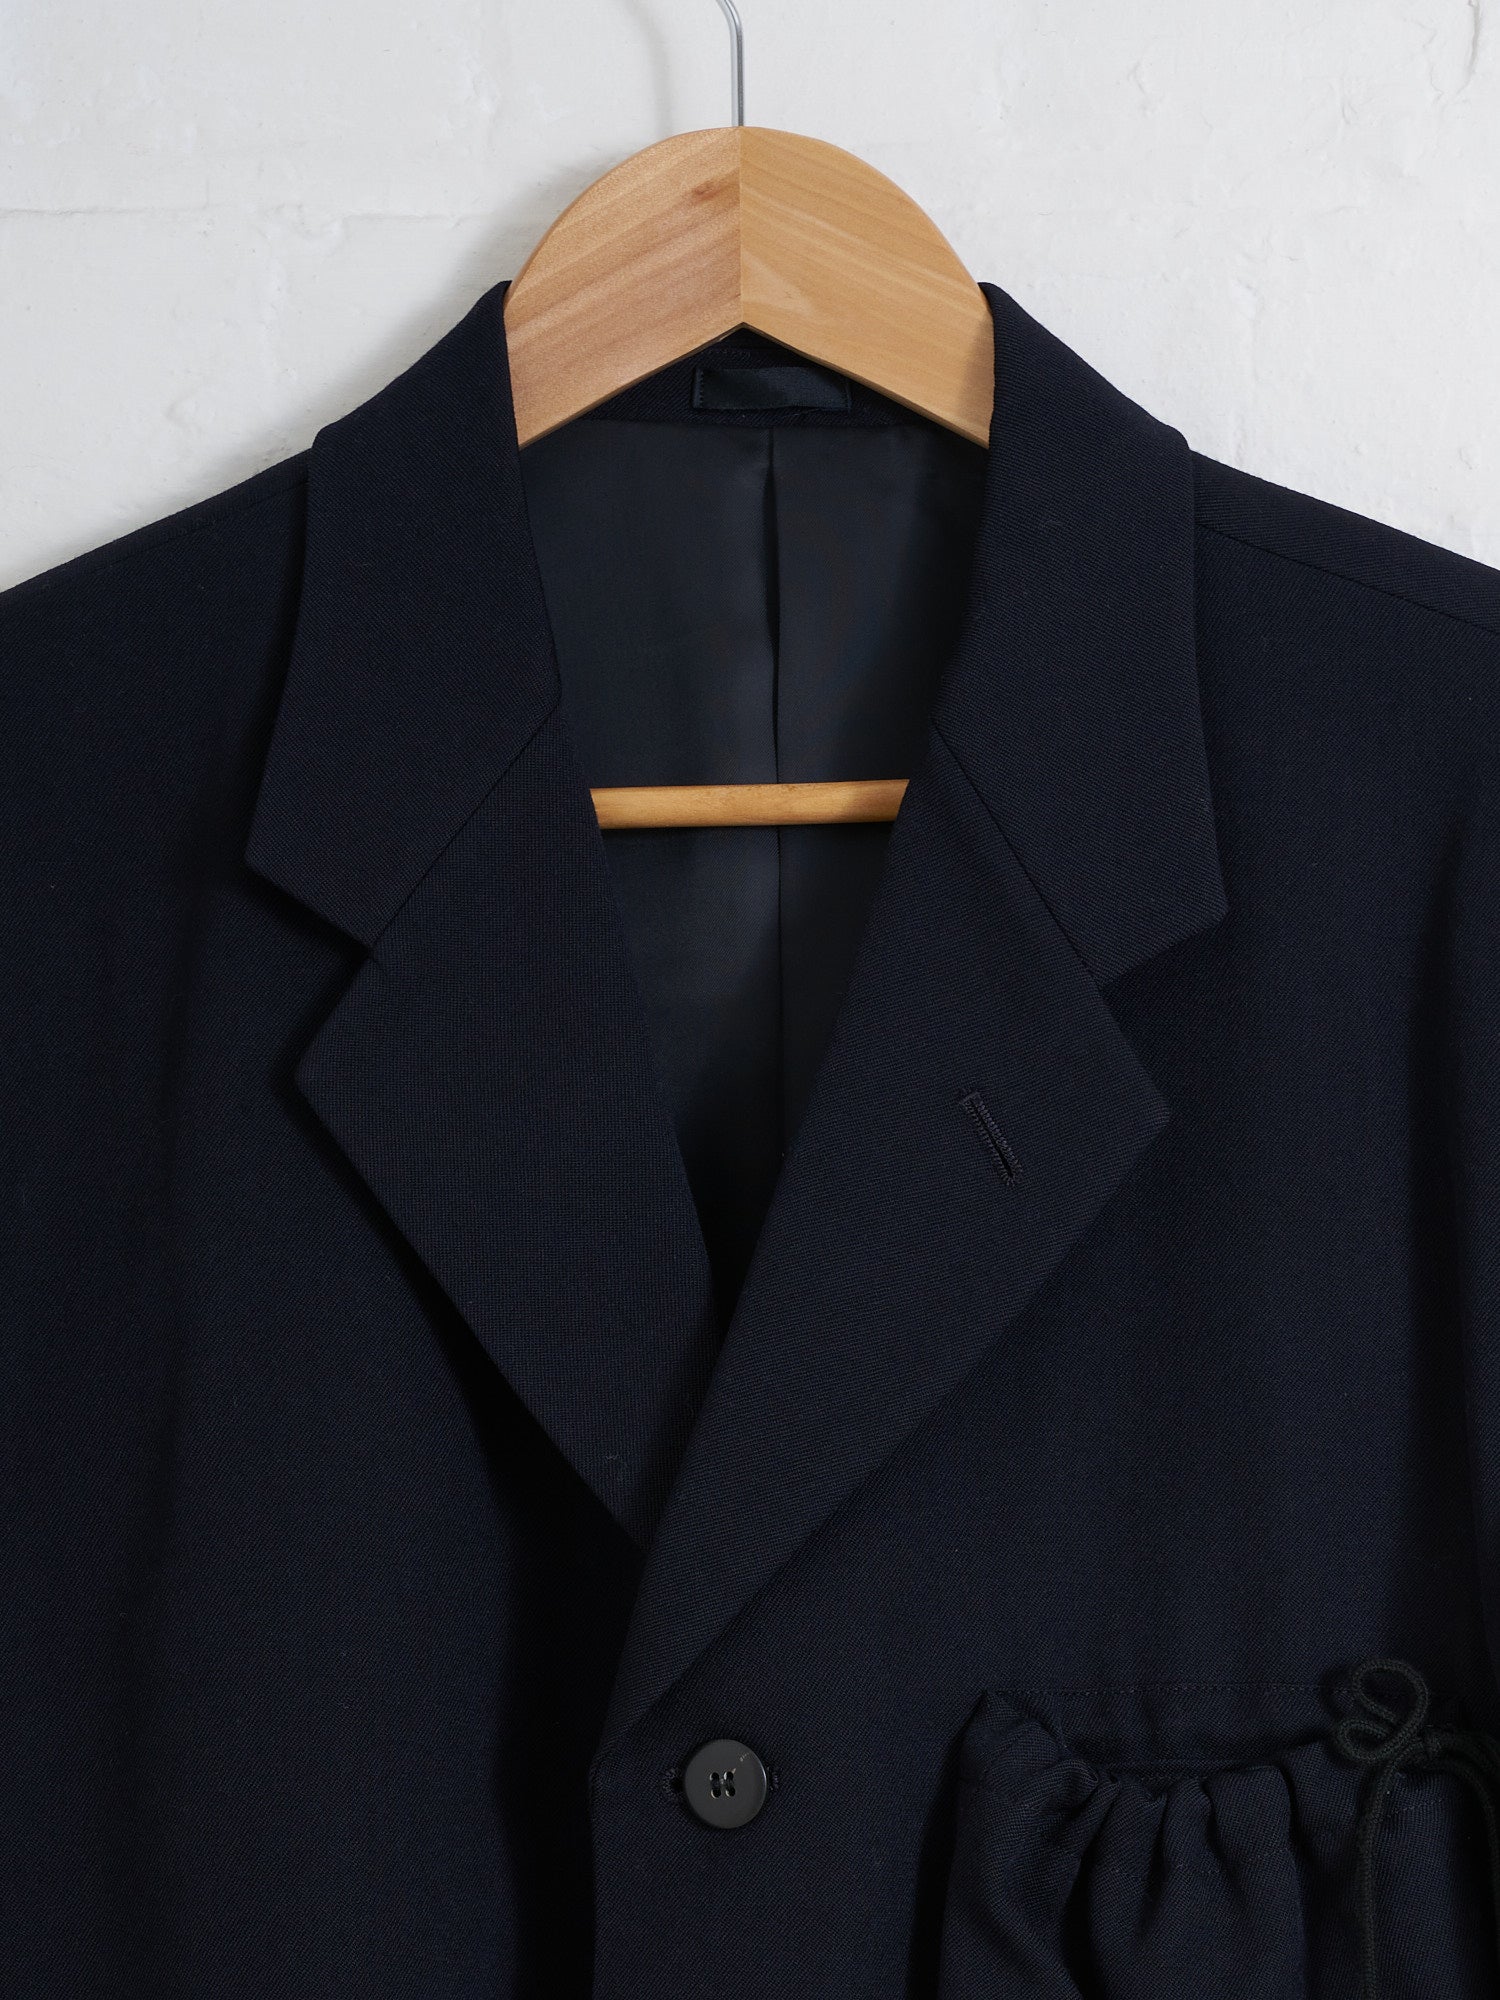 Giuliano Fujiwara very dark navy wool drawstring pocket blazer - size M